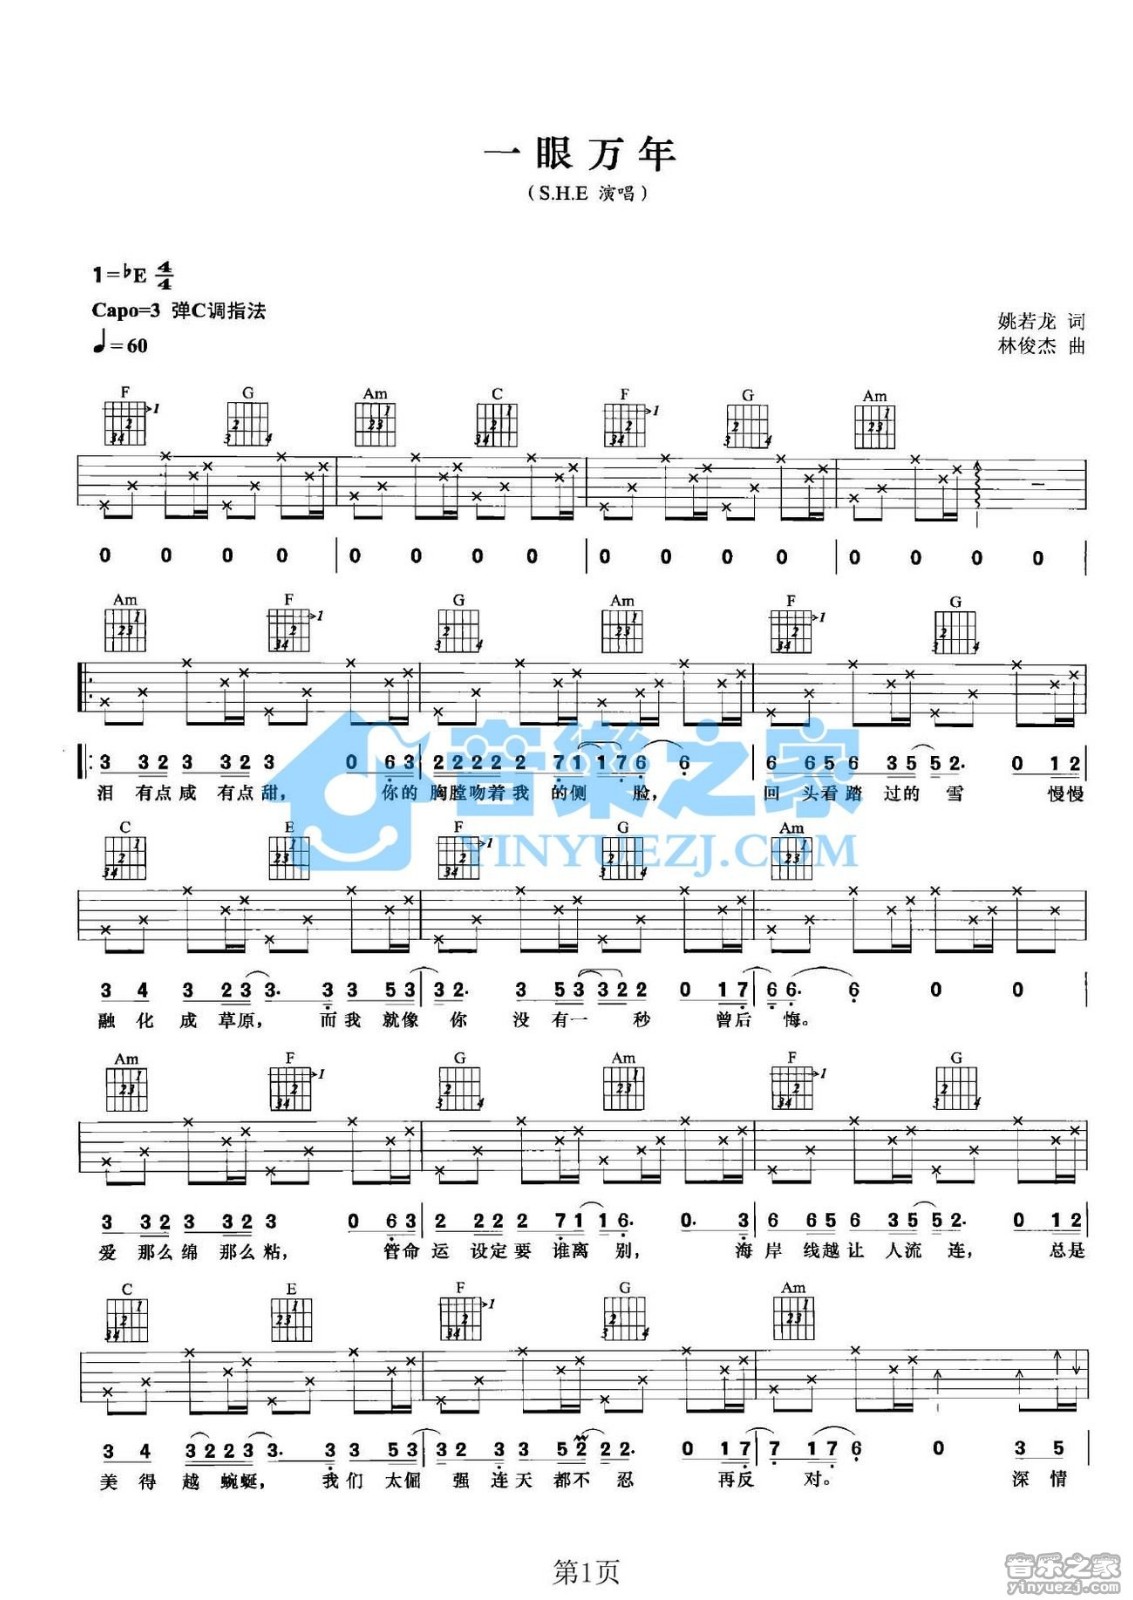 S.H.E《一眼万年》吉他谱(C调)-Guitar Music Score-看乐谱网